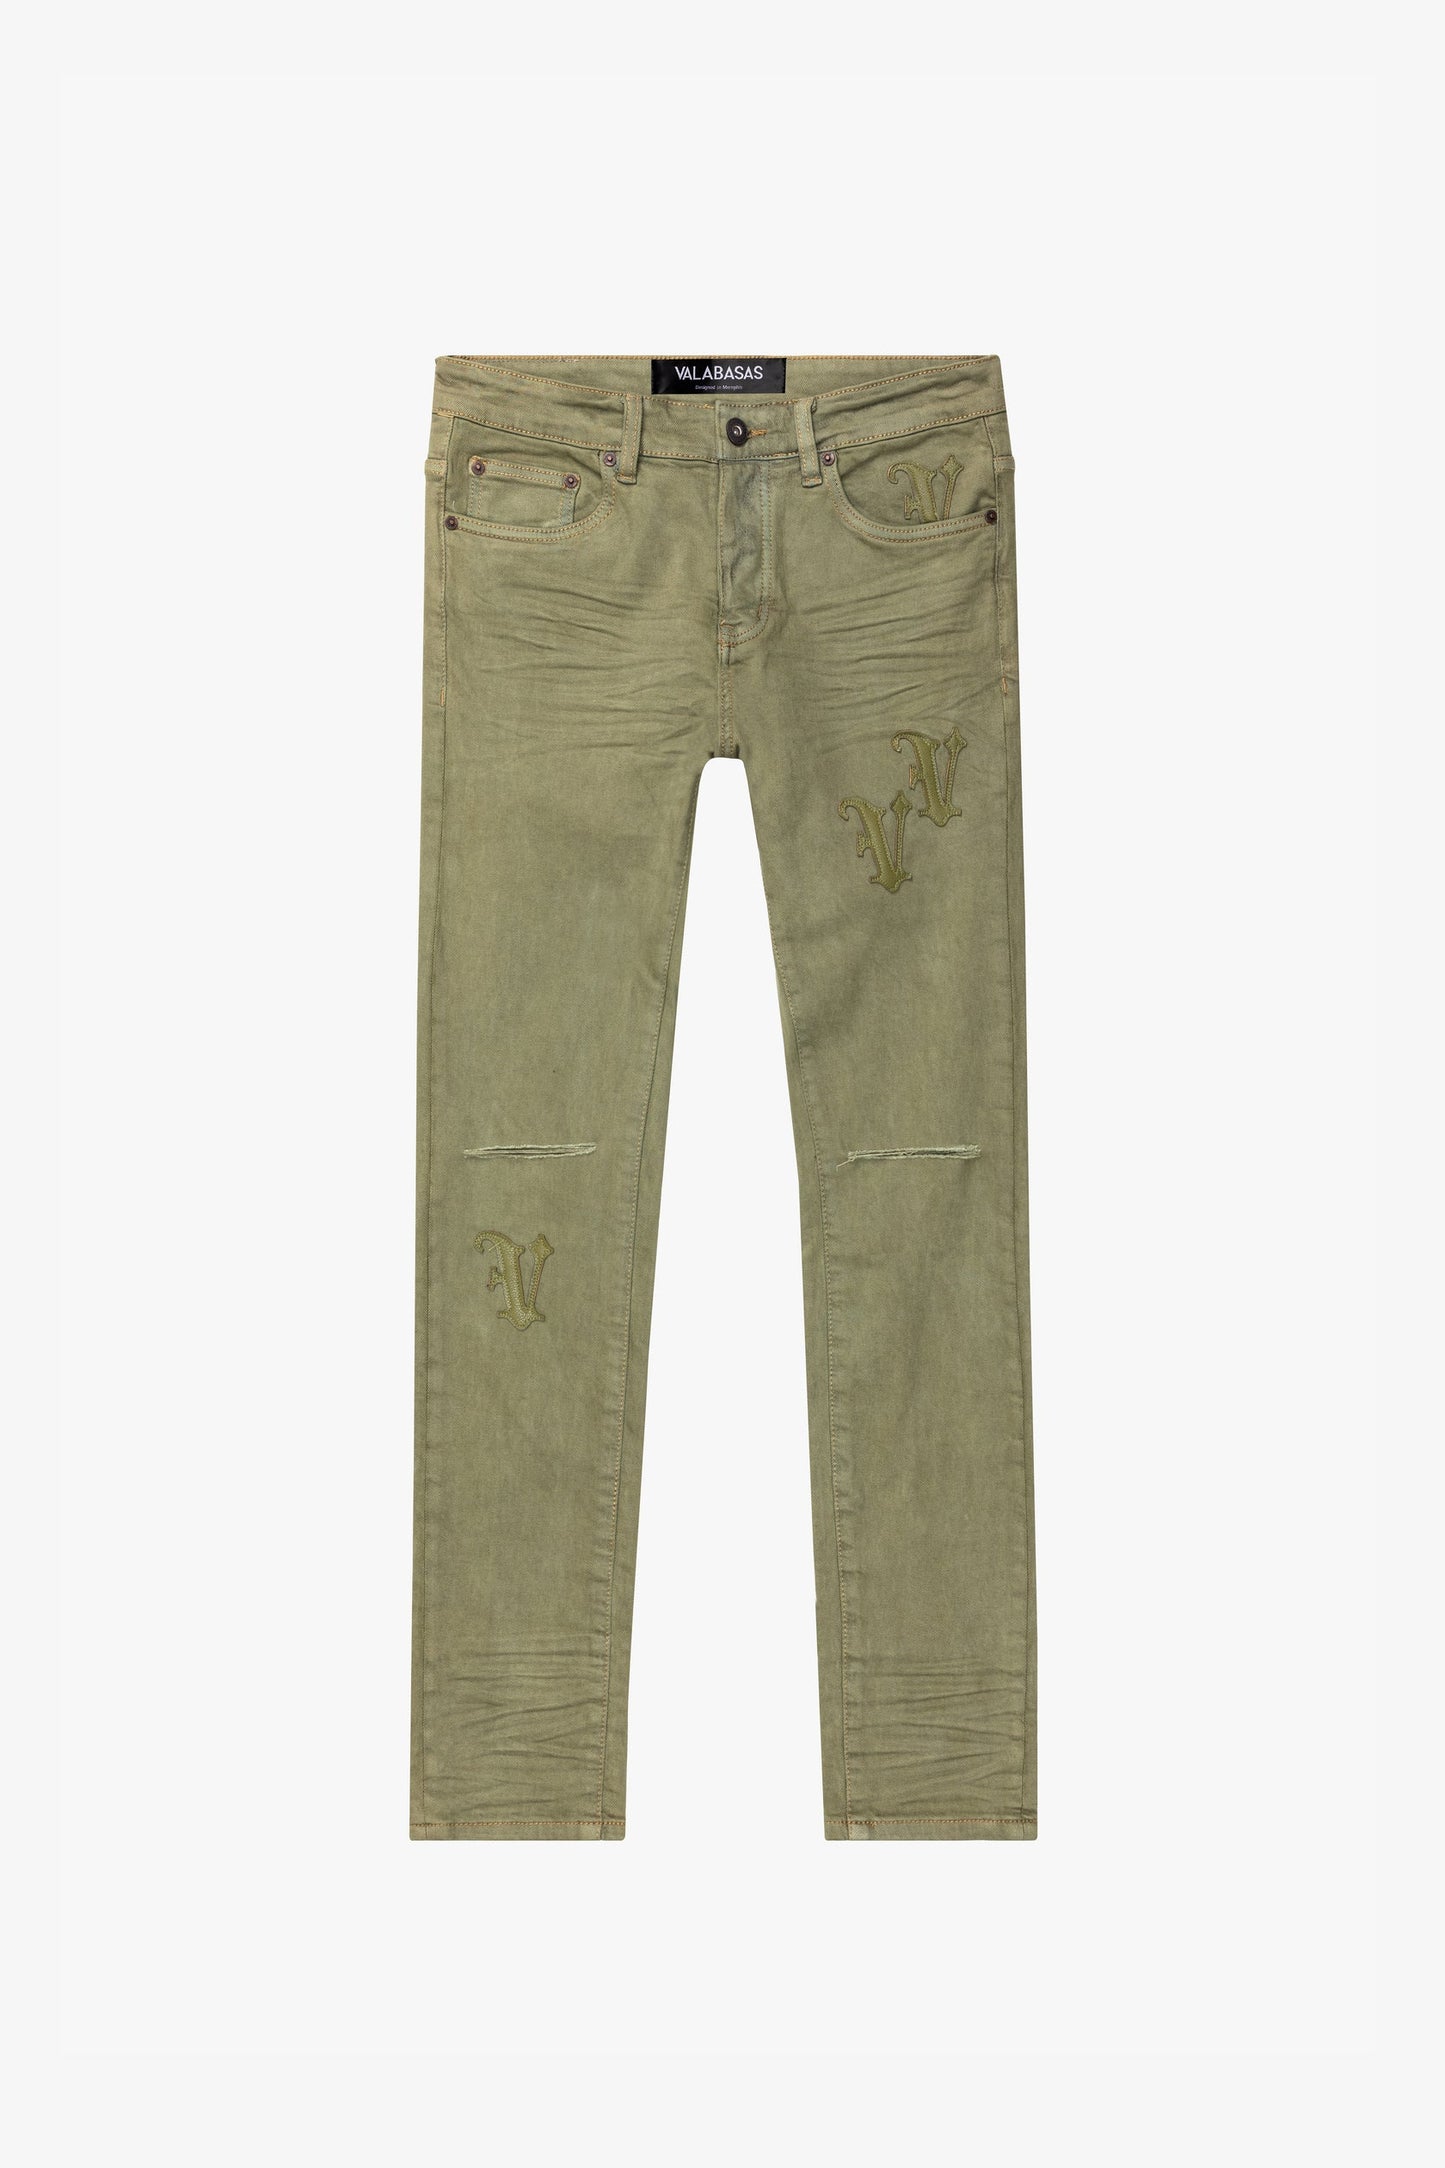 Valabasas "Nimbus" Olive Green Skinny Jeans